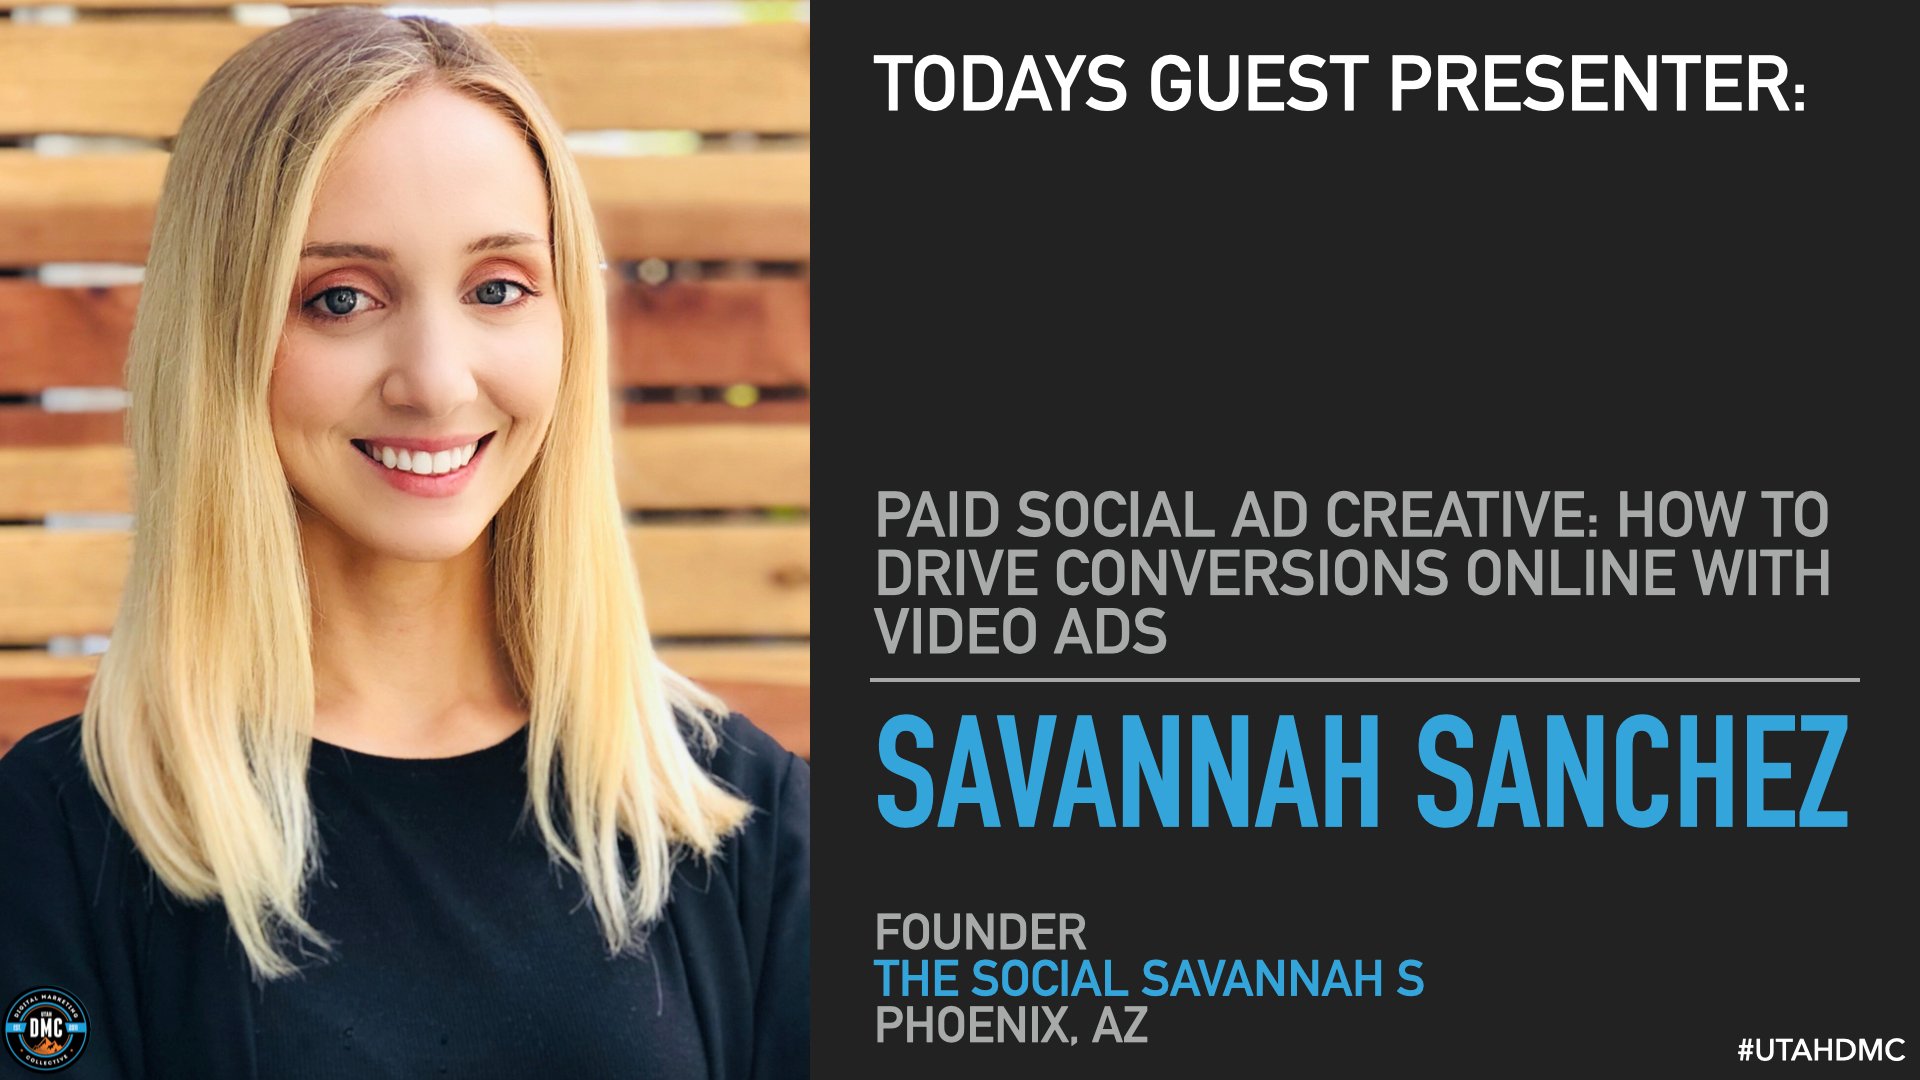 Utah DMC Online Savannah Sanchez  - Paid Social Ad Creative - How to Drive Conversions Online with Video Ads